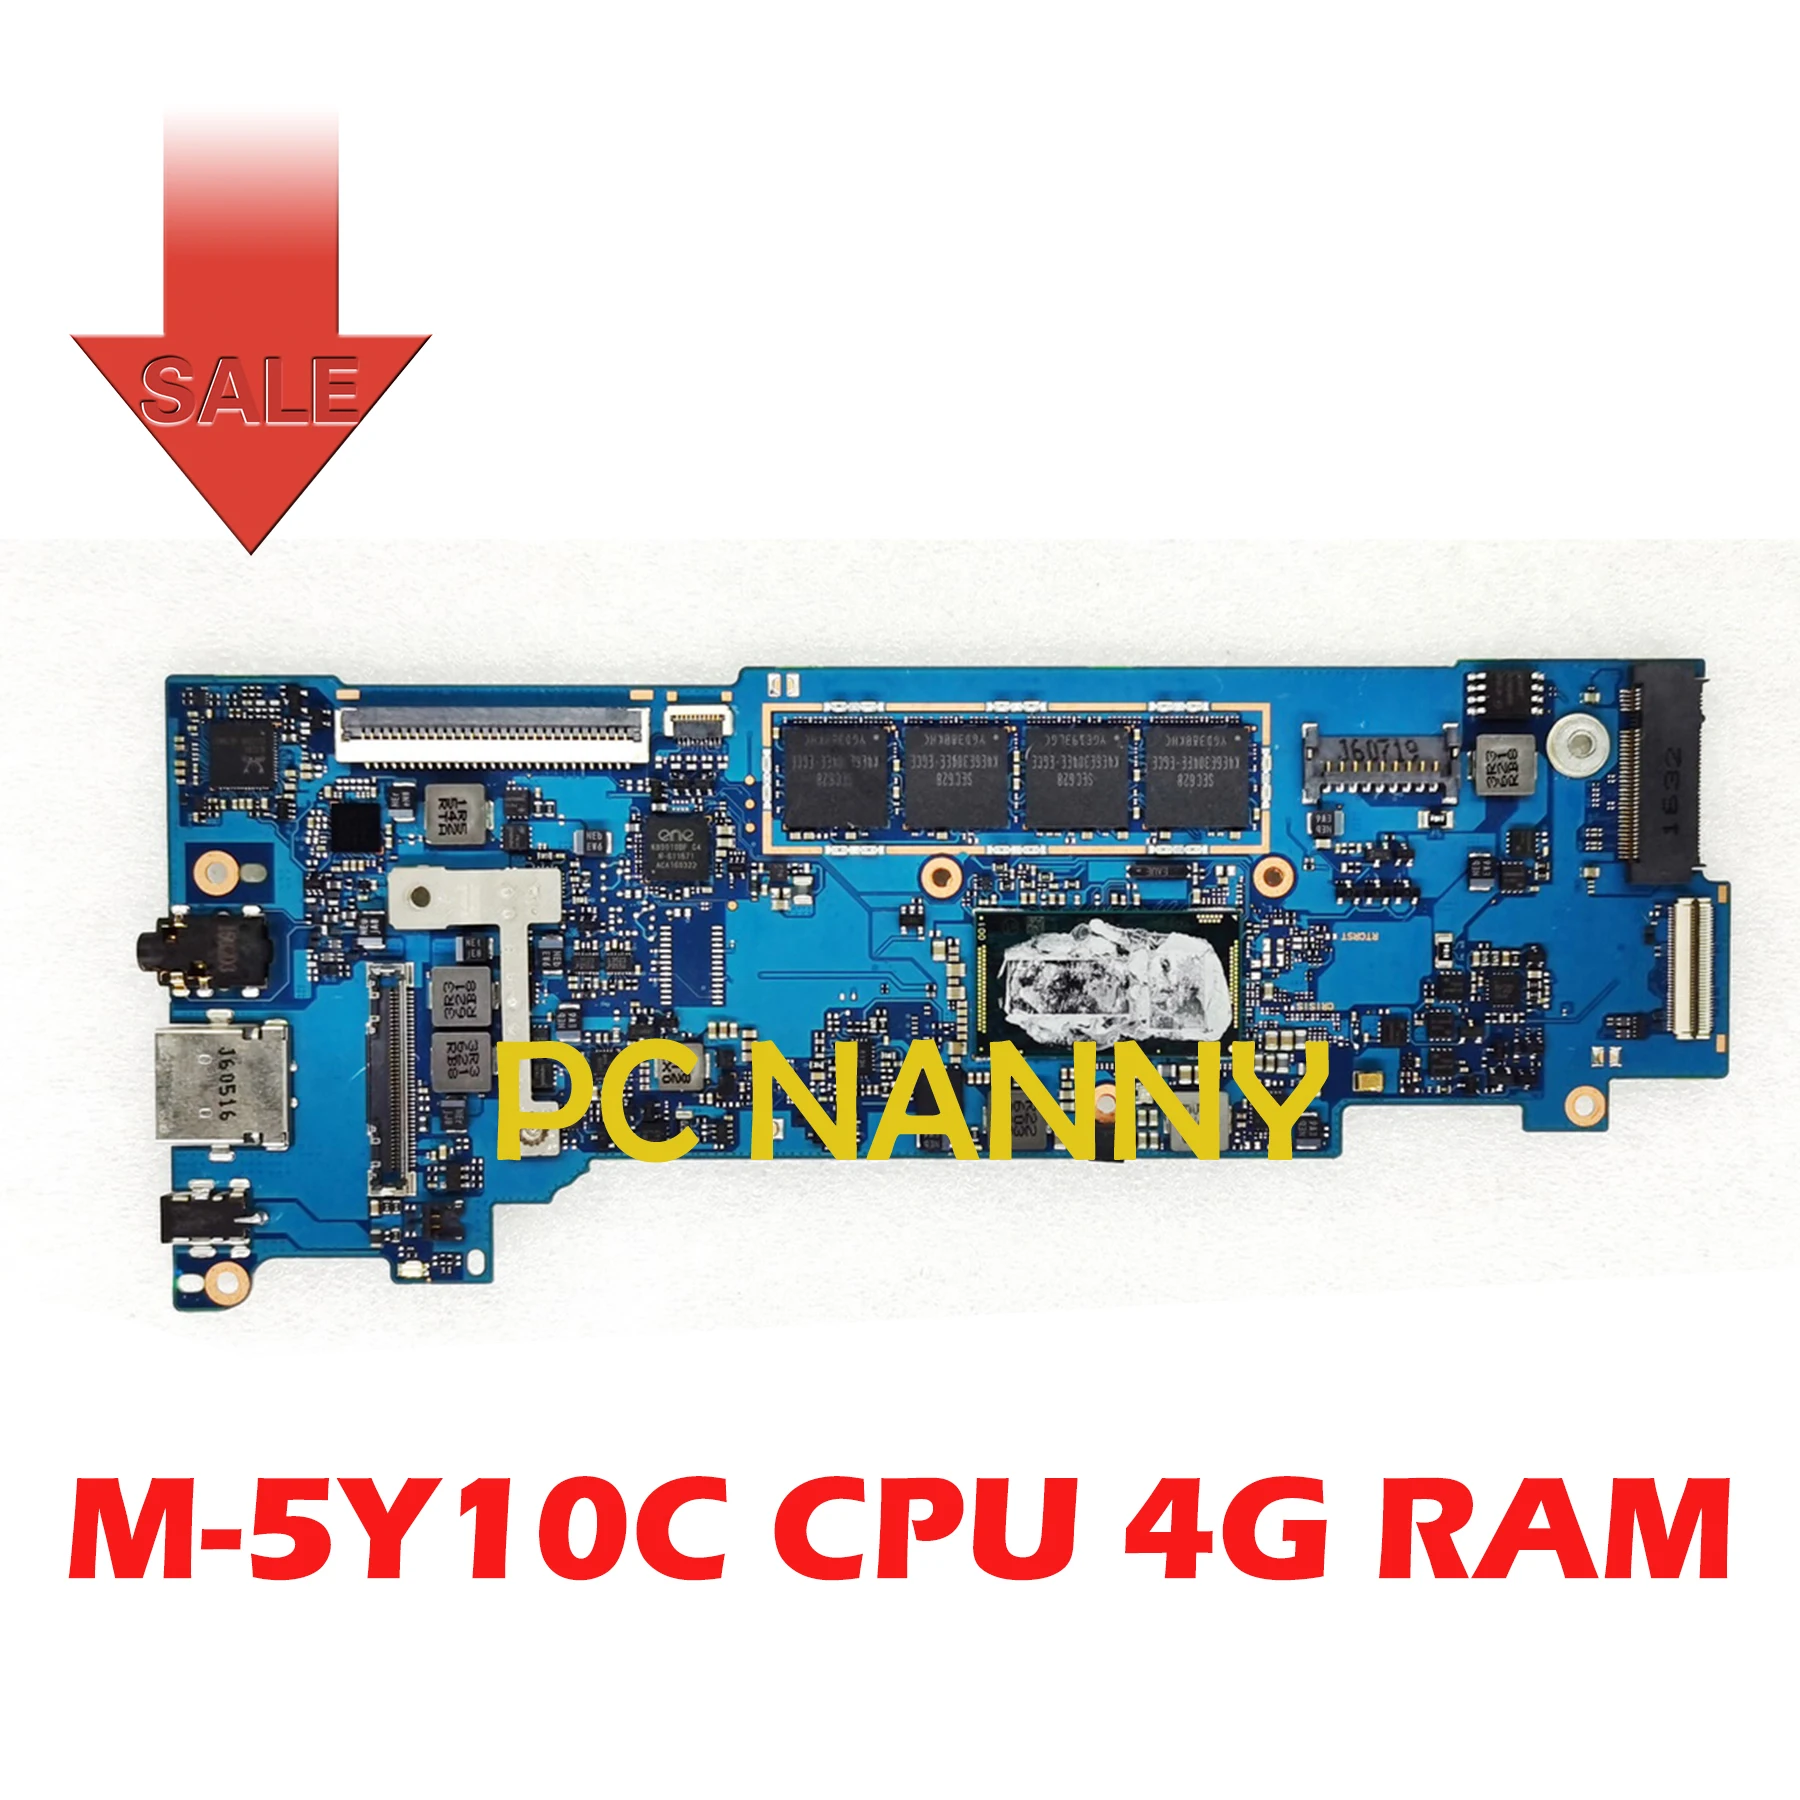 

PCNANNY for SAMSUNG 930X2K NP940X2K NP930X2K laptop motherboard BA41-02433A M-5Y10C CPU 4G RAM